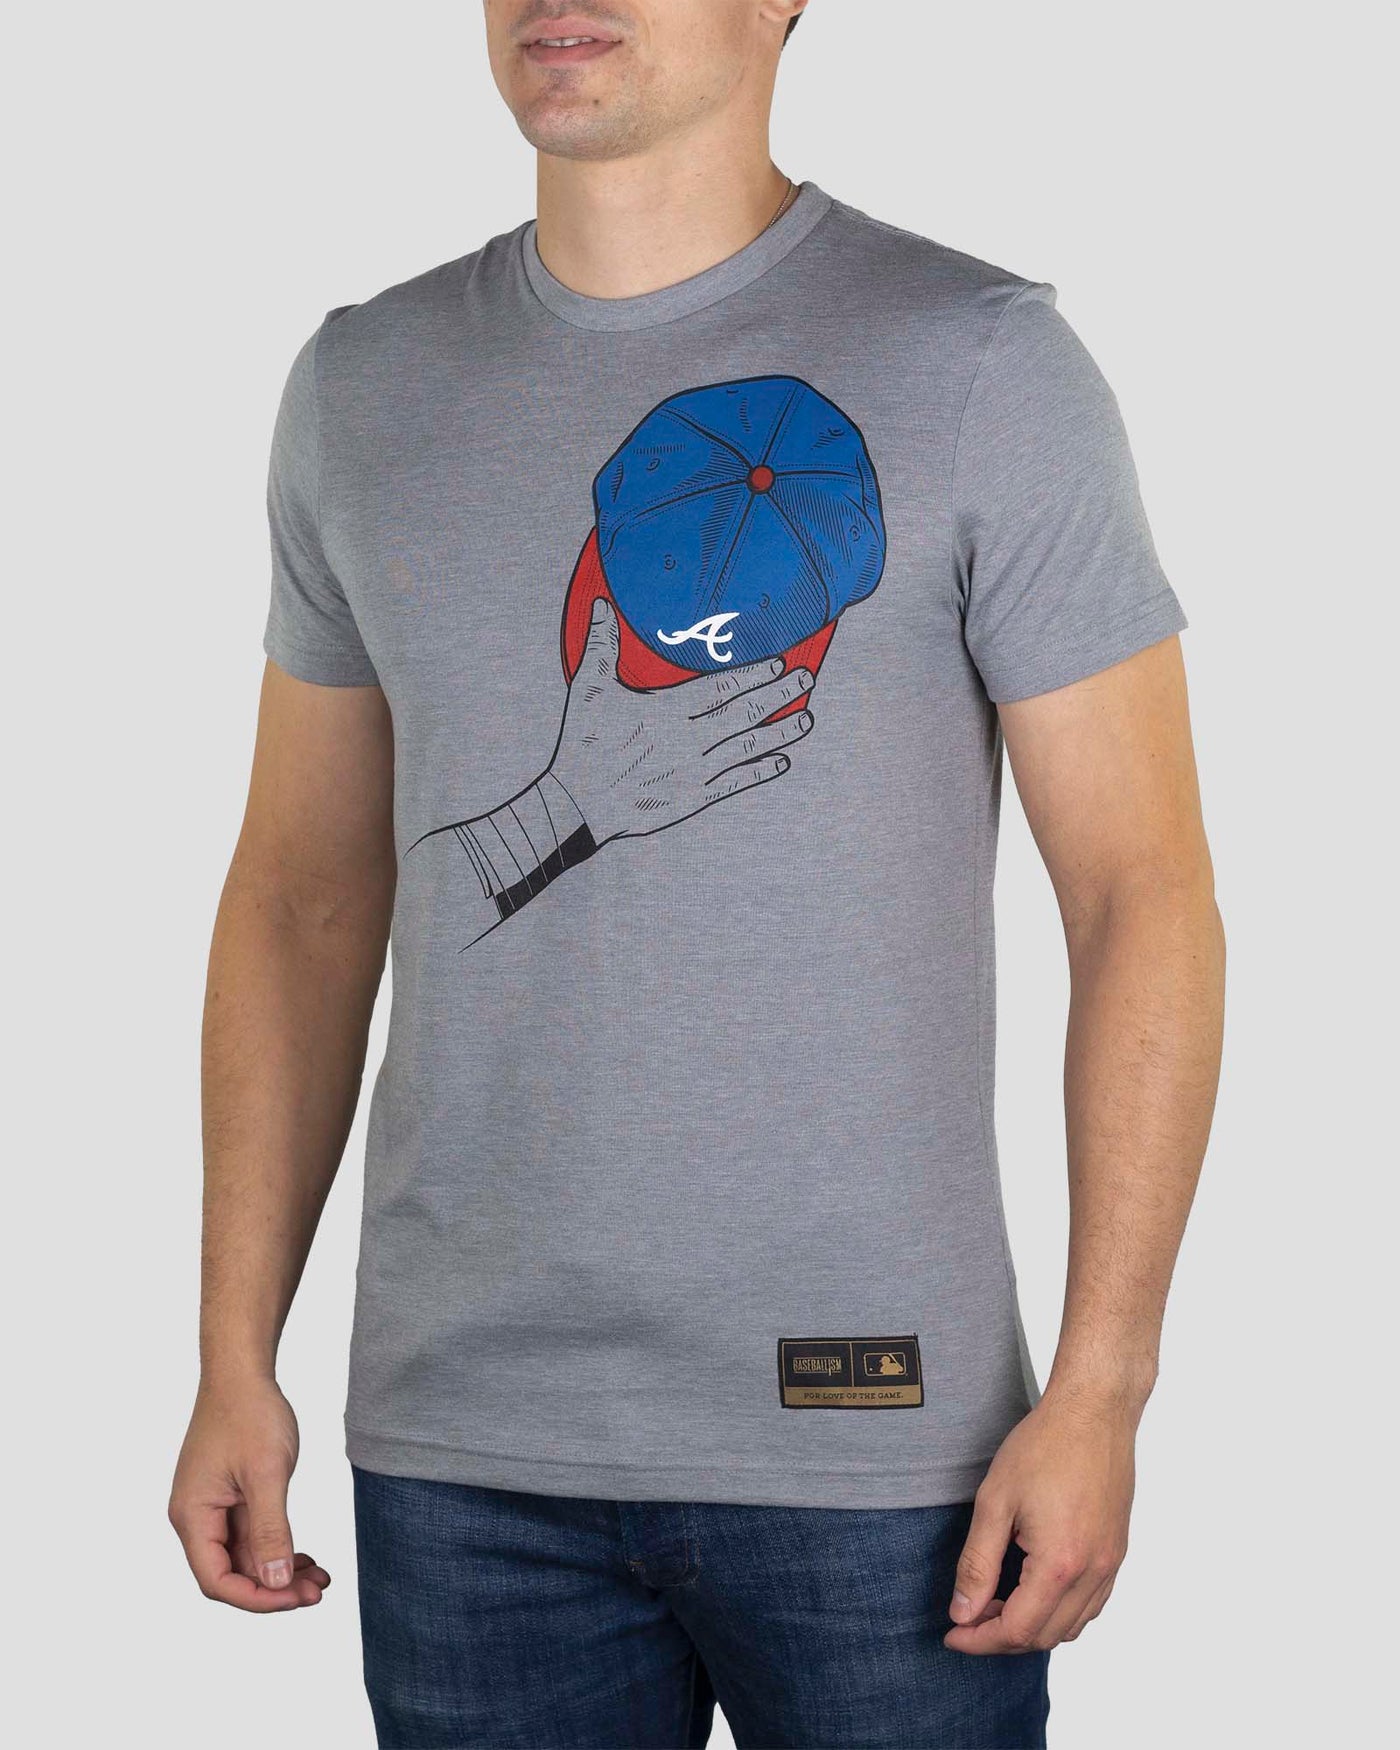 Anthem T-Shirt - Atlanta Braves - MLB x Baseballism Large